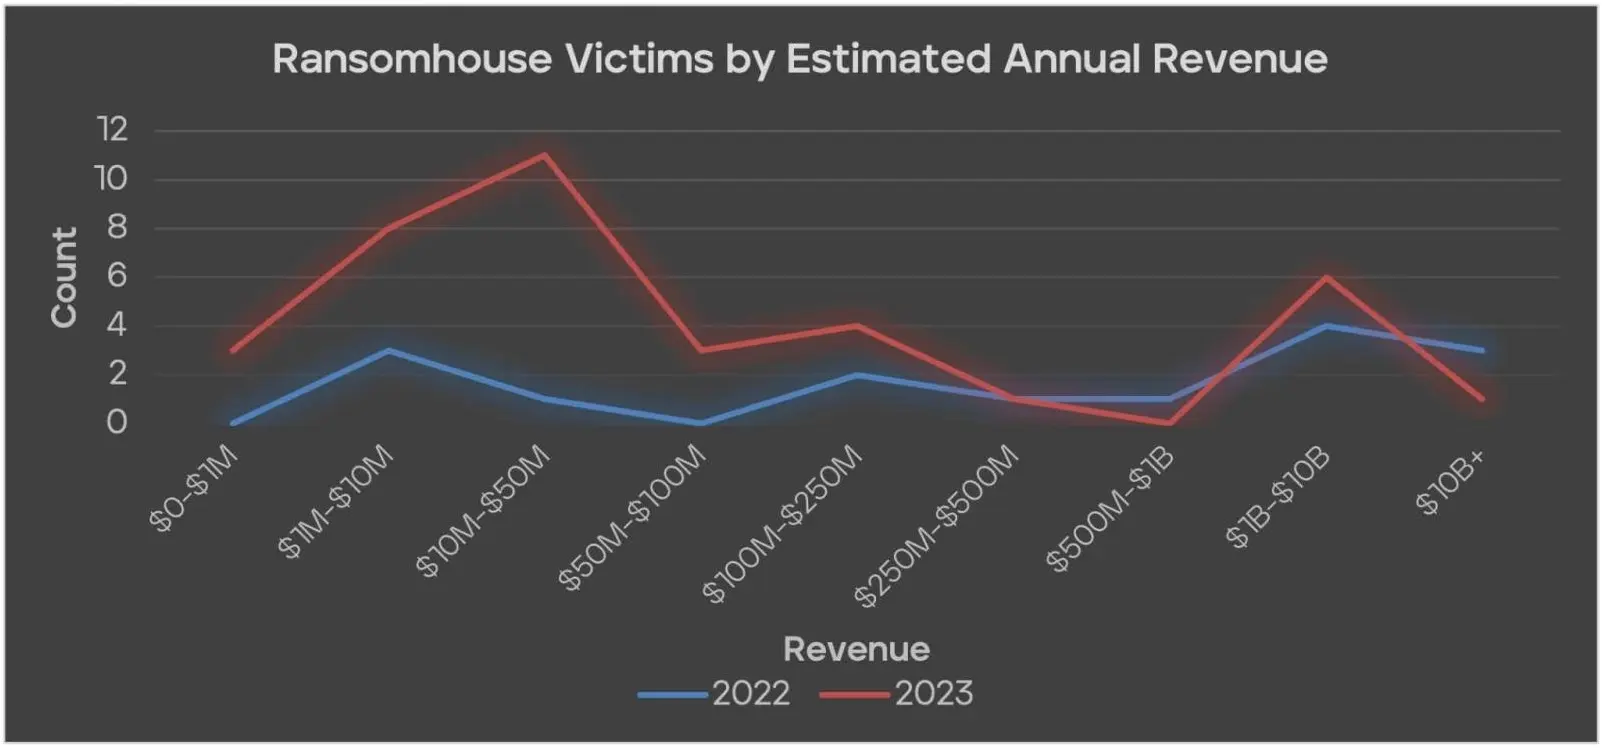 RansomHouse's victims' size